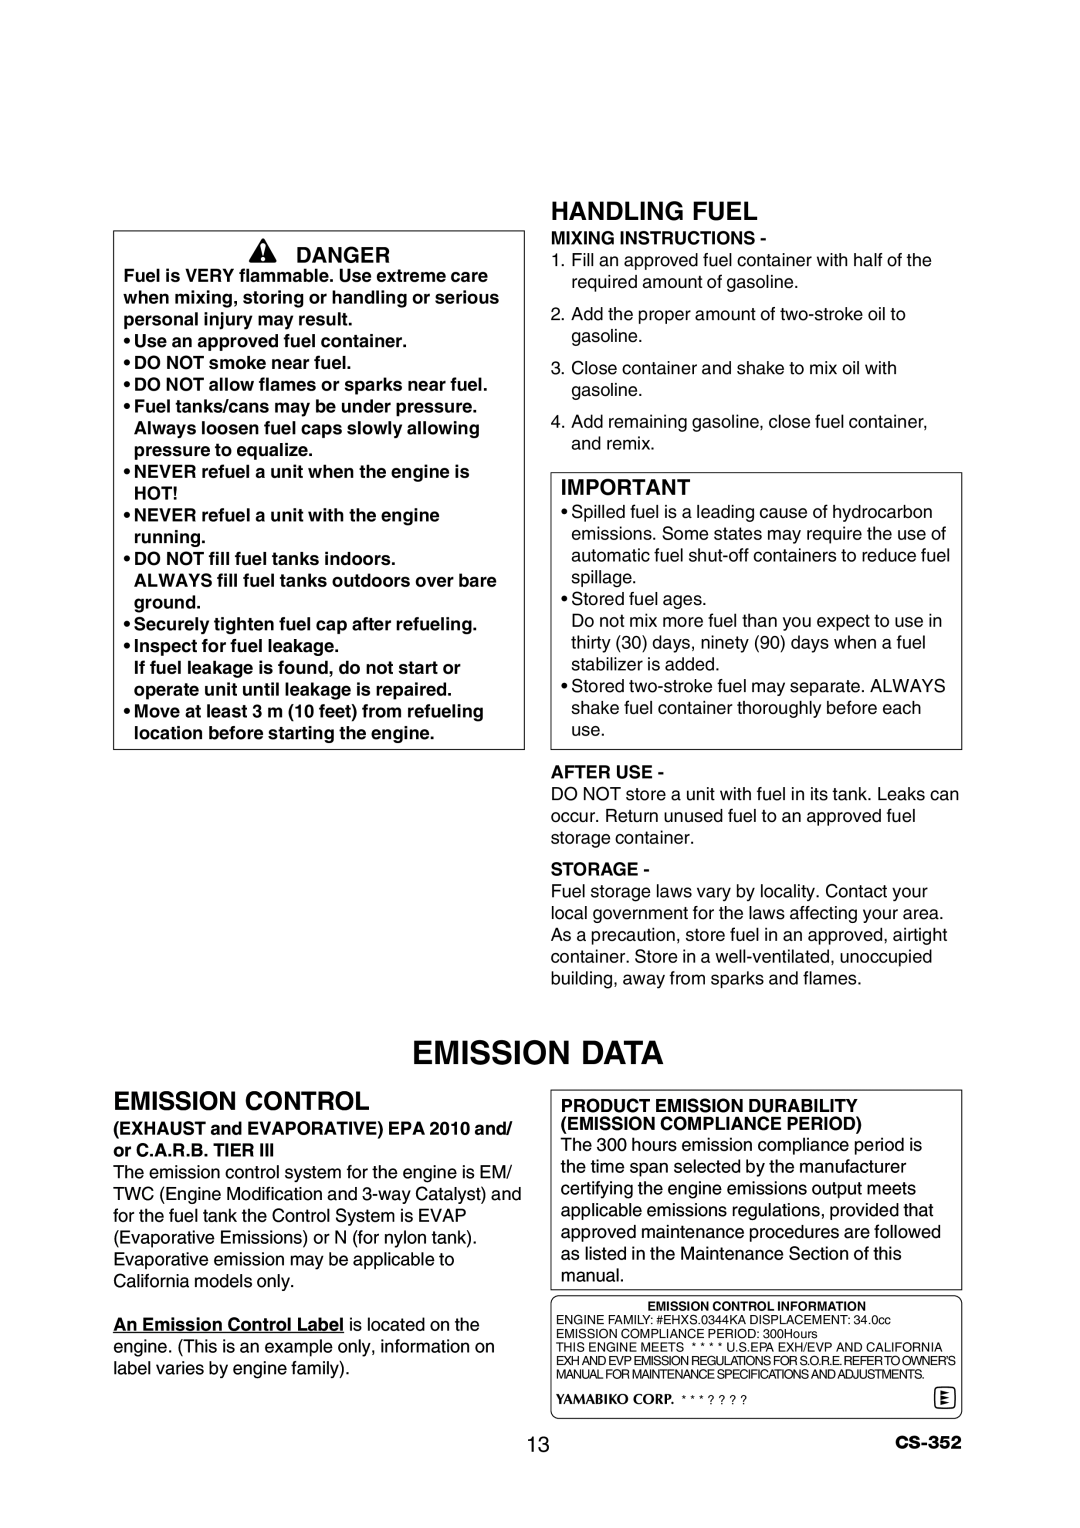 Echo CS-352 instruction manual Emission Data, Handling Fuel, Emission Control, Danger 